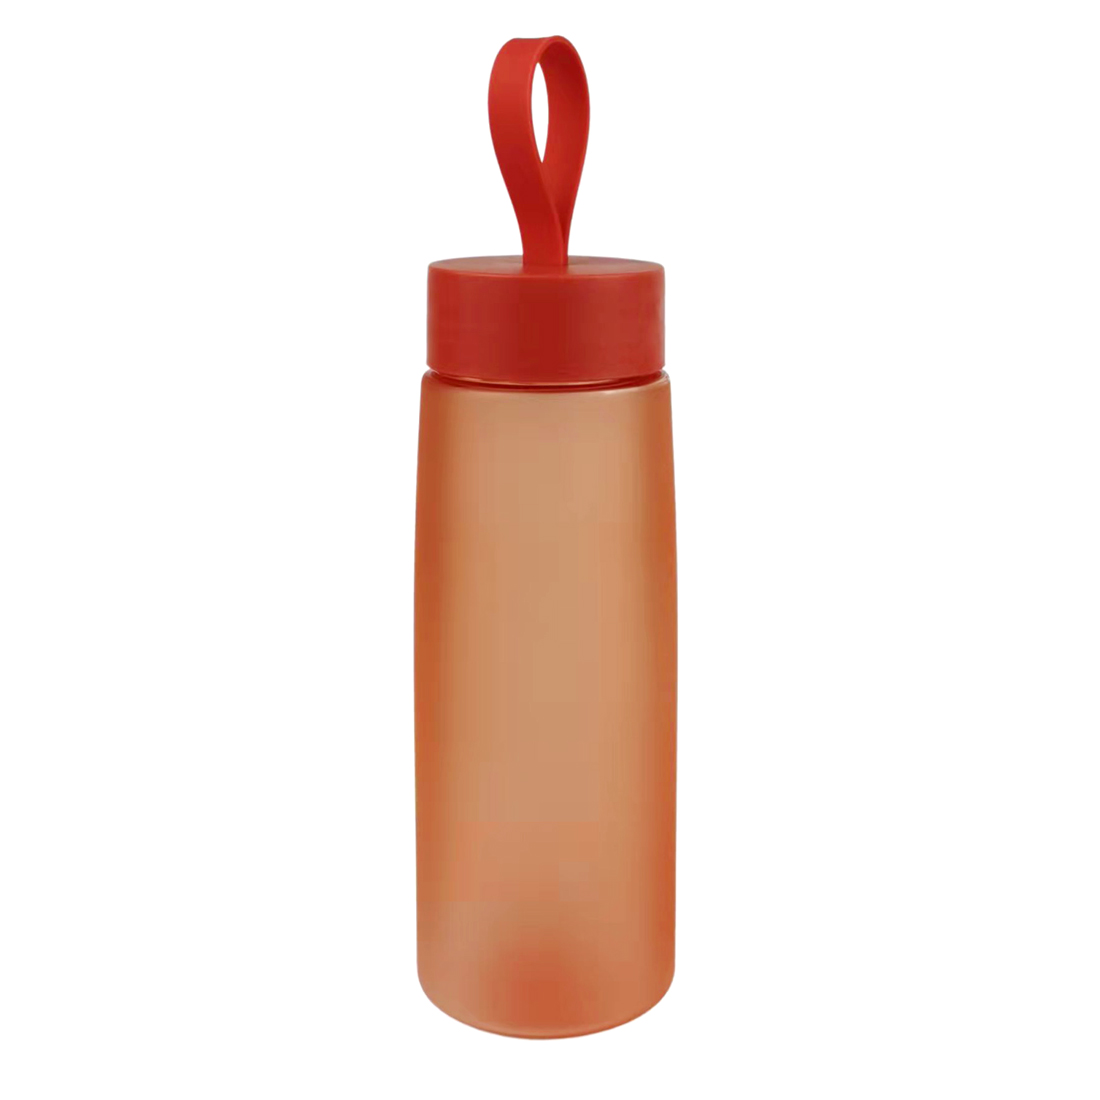 Бутылка для воды Flappy - Оранжевый OO